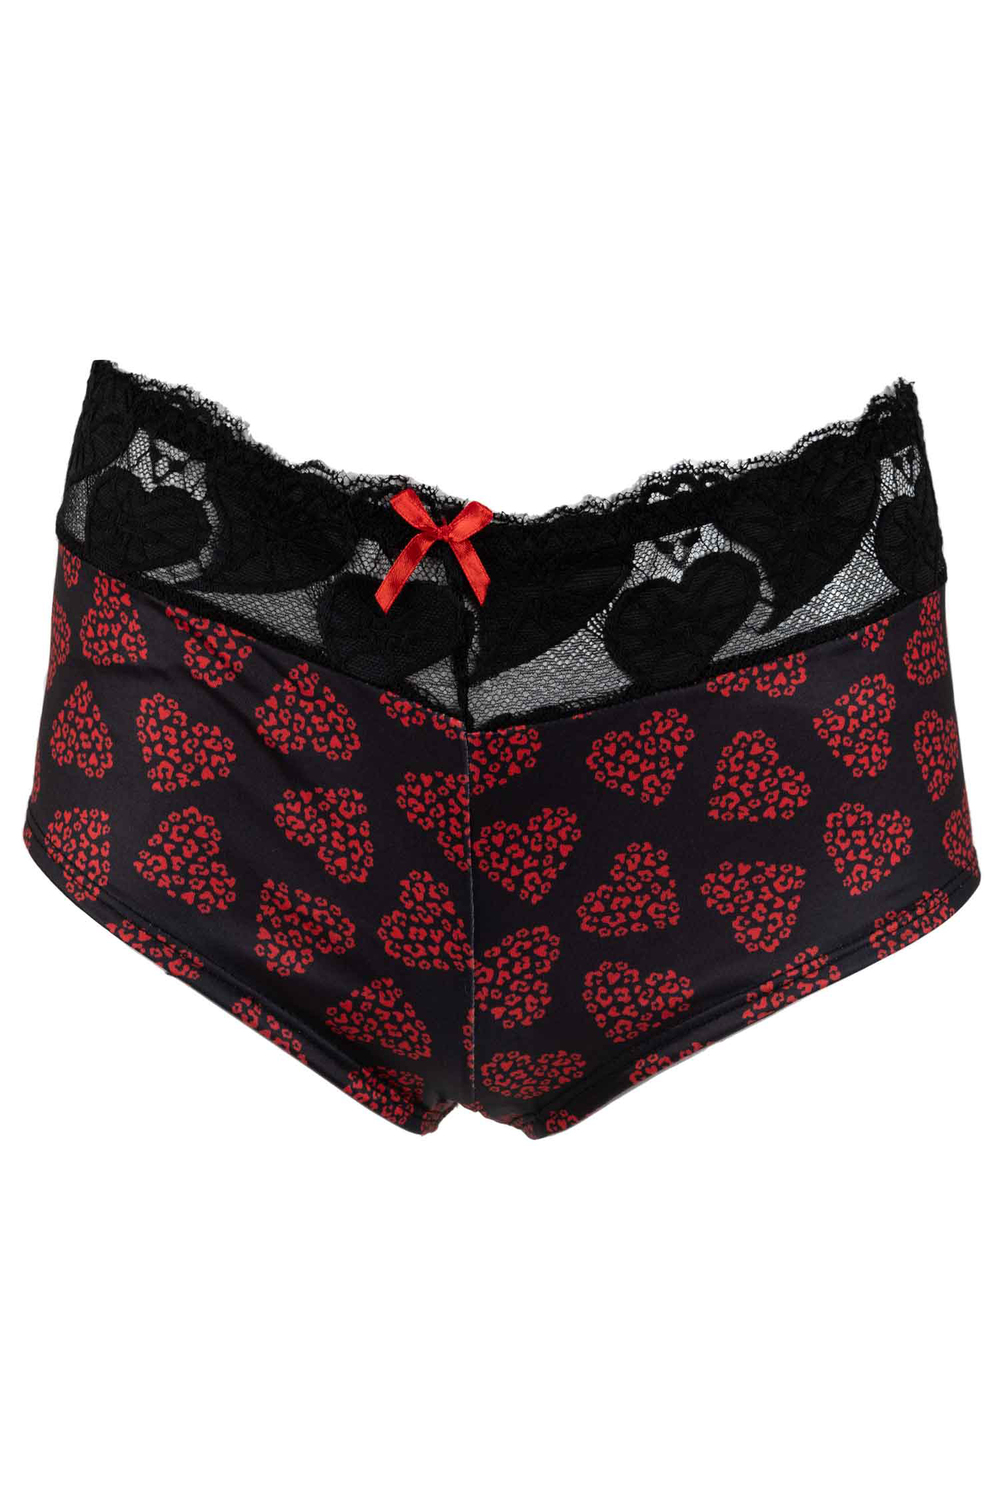 5XL lace boyshorts panties, Plus Size Lingerie, Snazzyway India